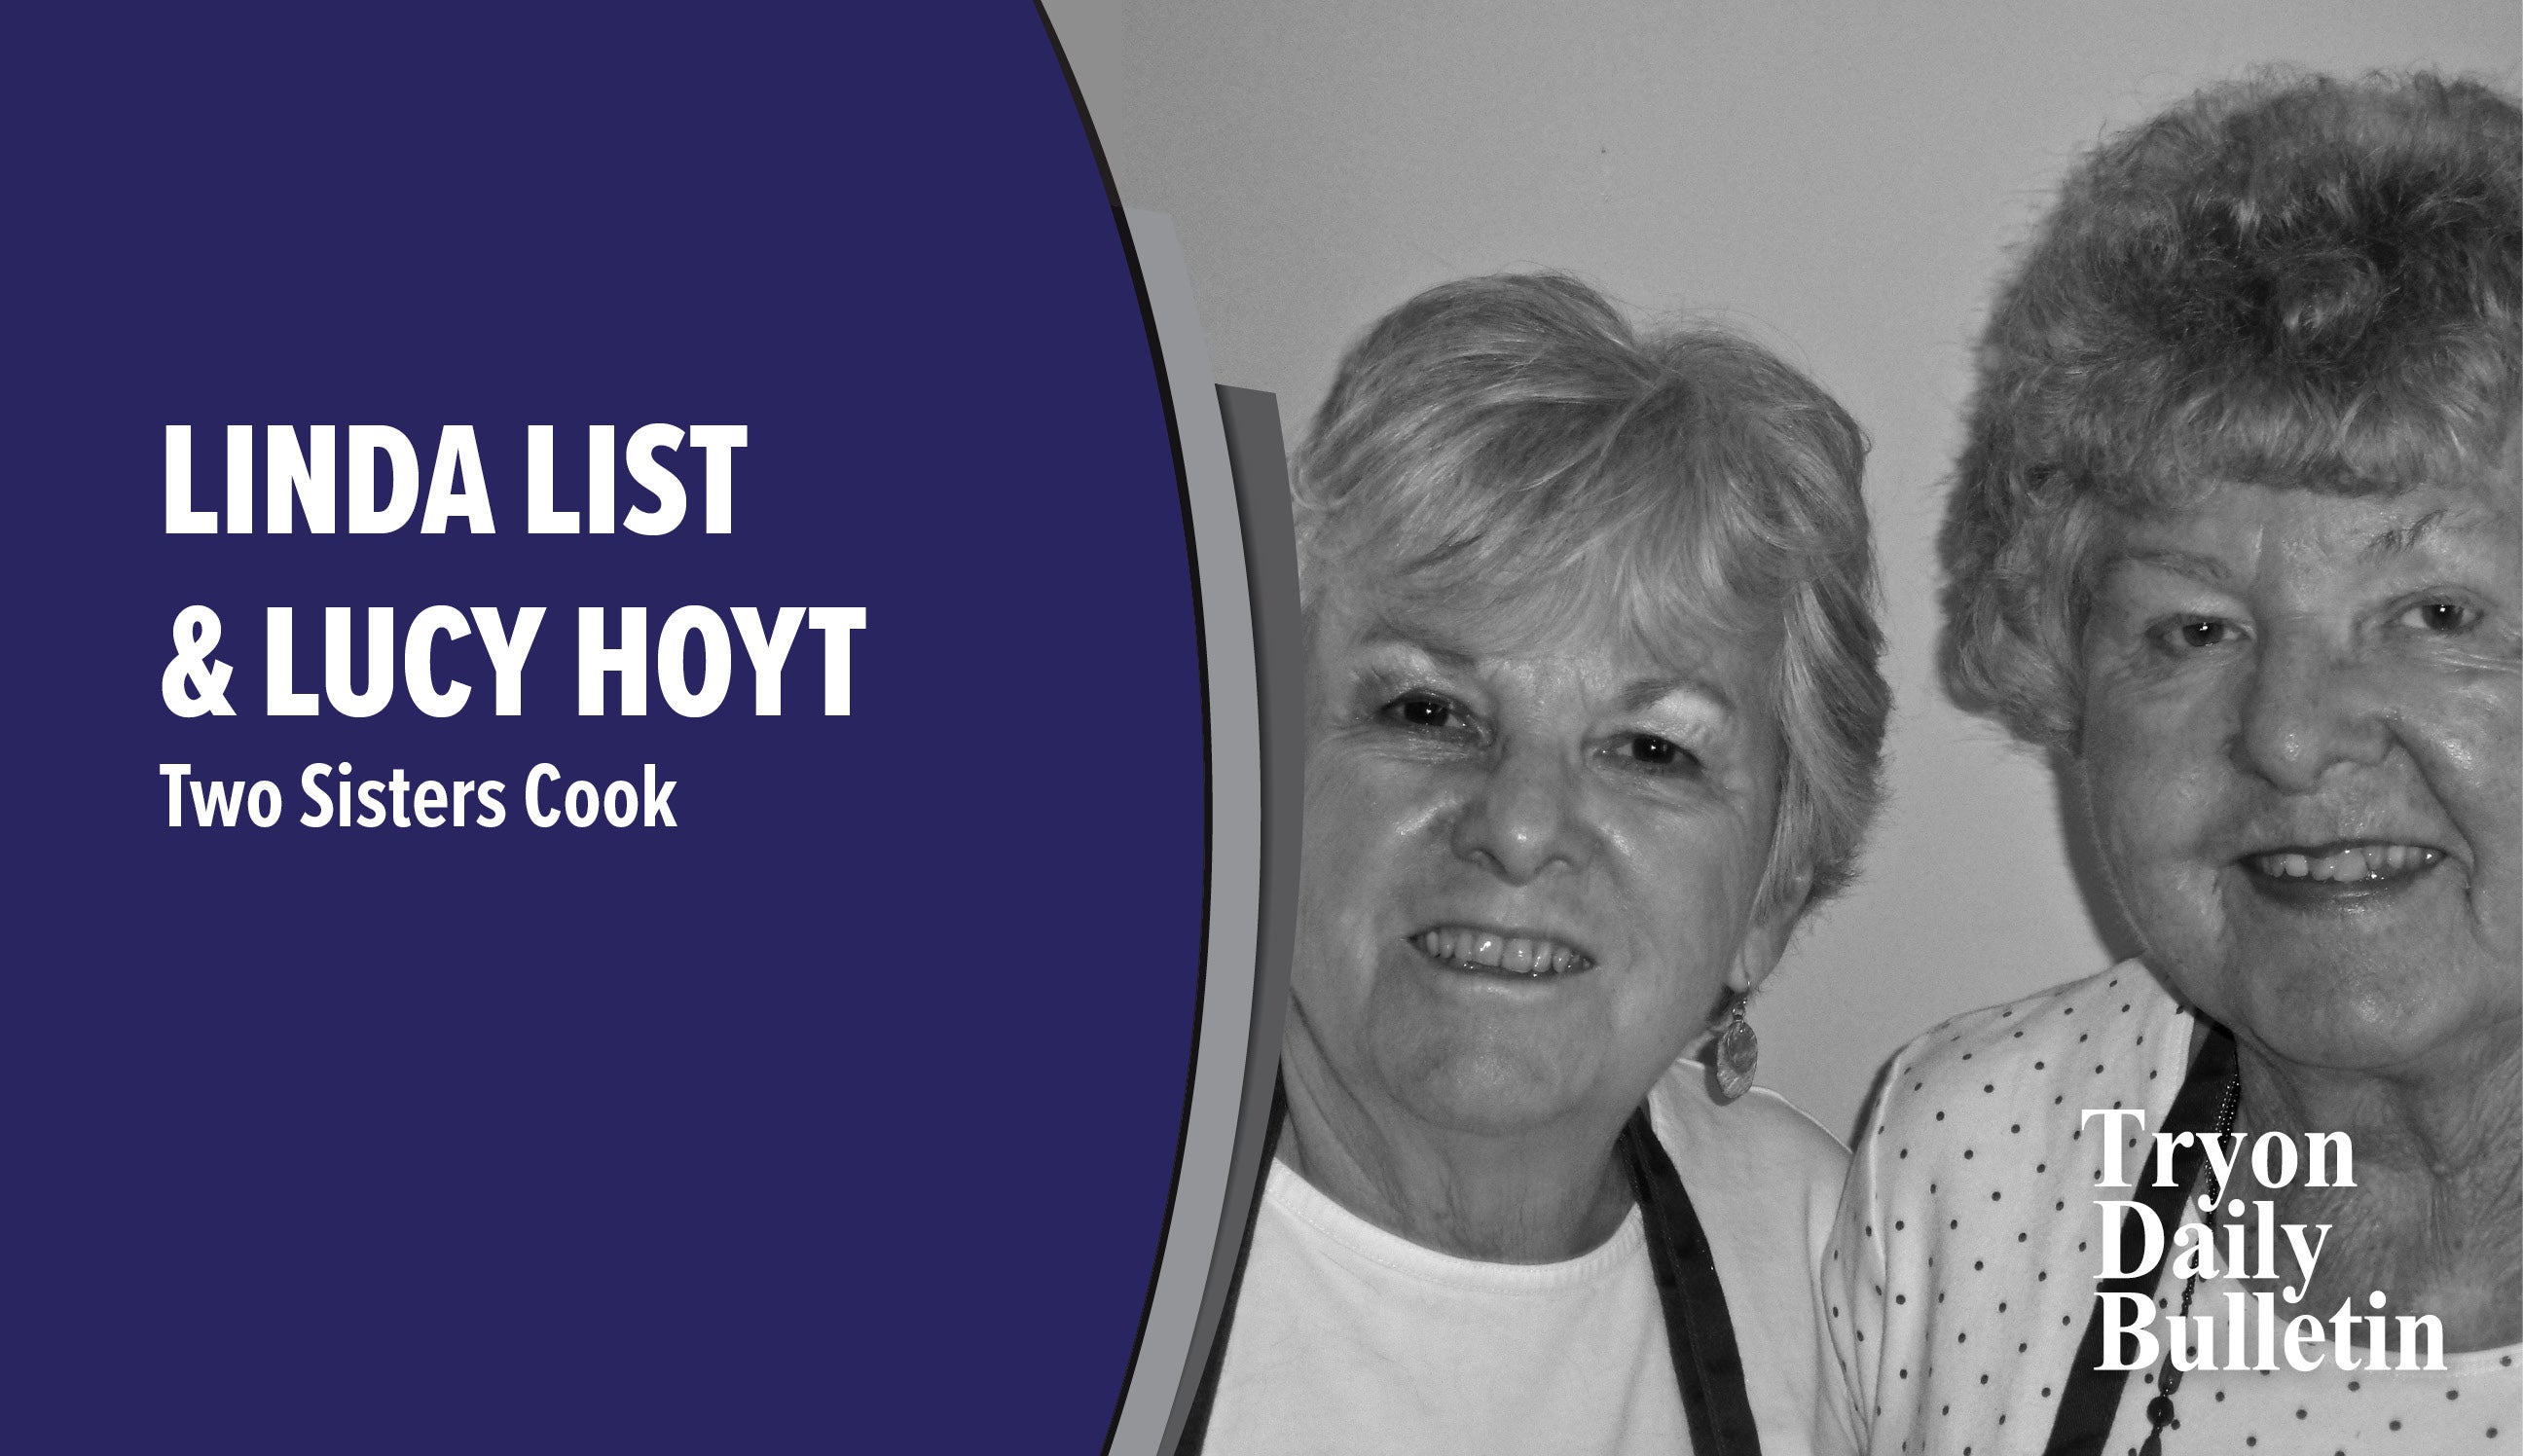 ik ben ziek vaak Vuiligheid Linda List Lucy Hoyt, Author at The Tryon Daily Bulletin | The Tryon Daily  Bulletin